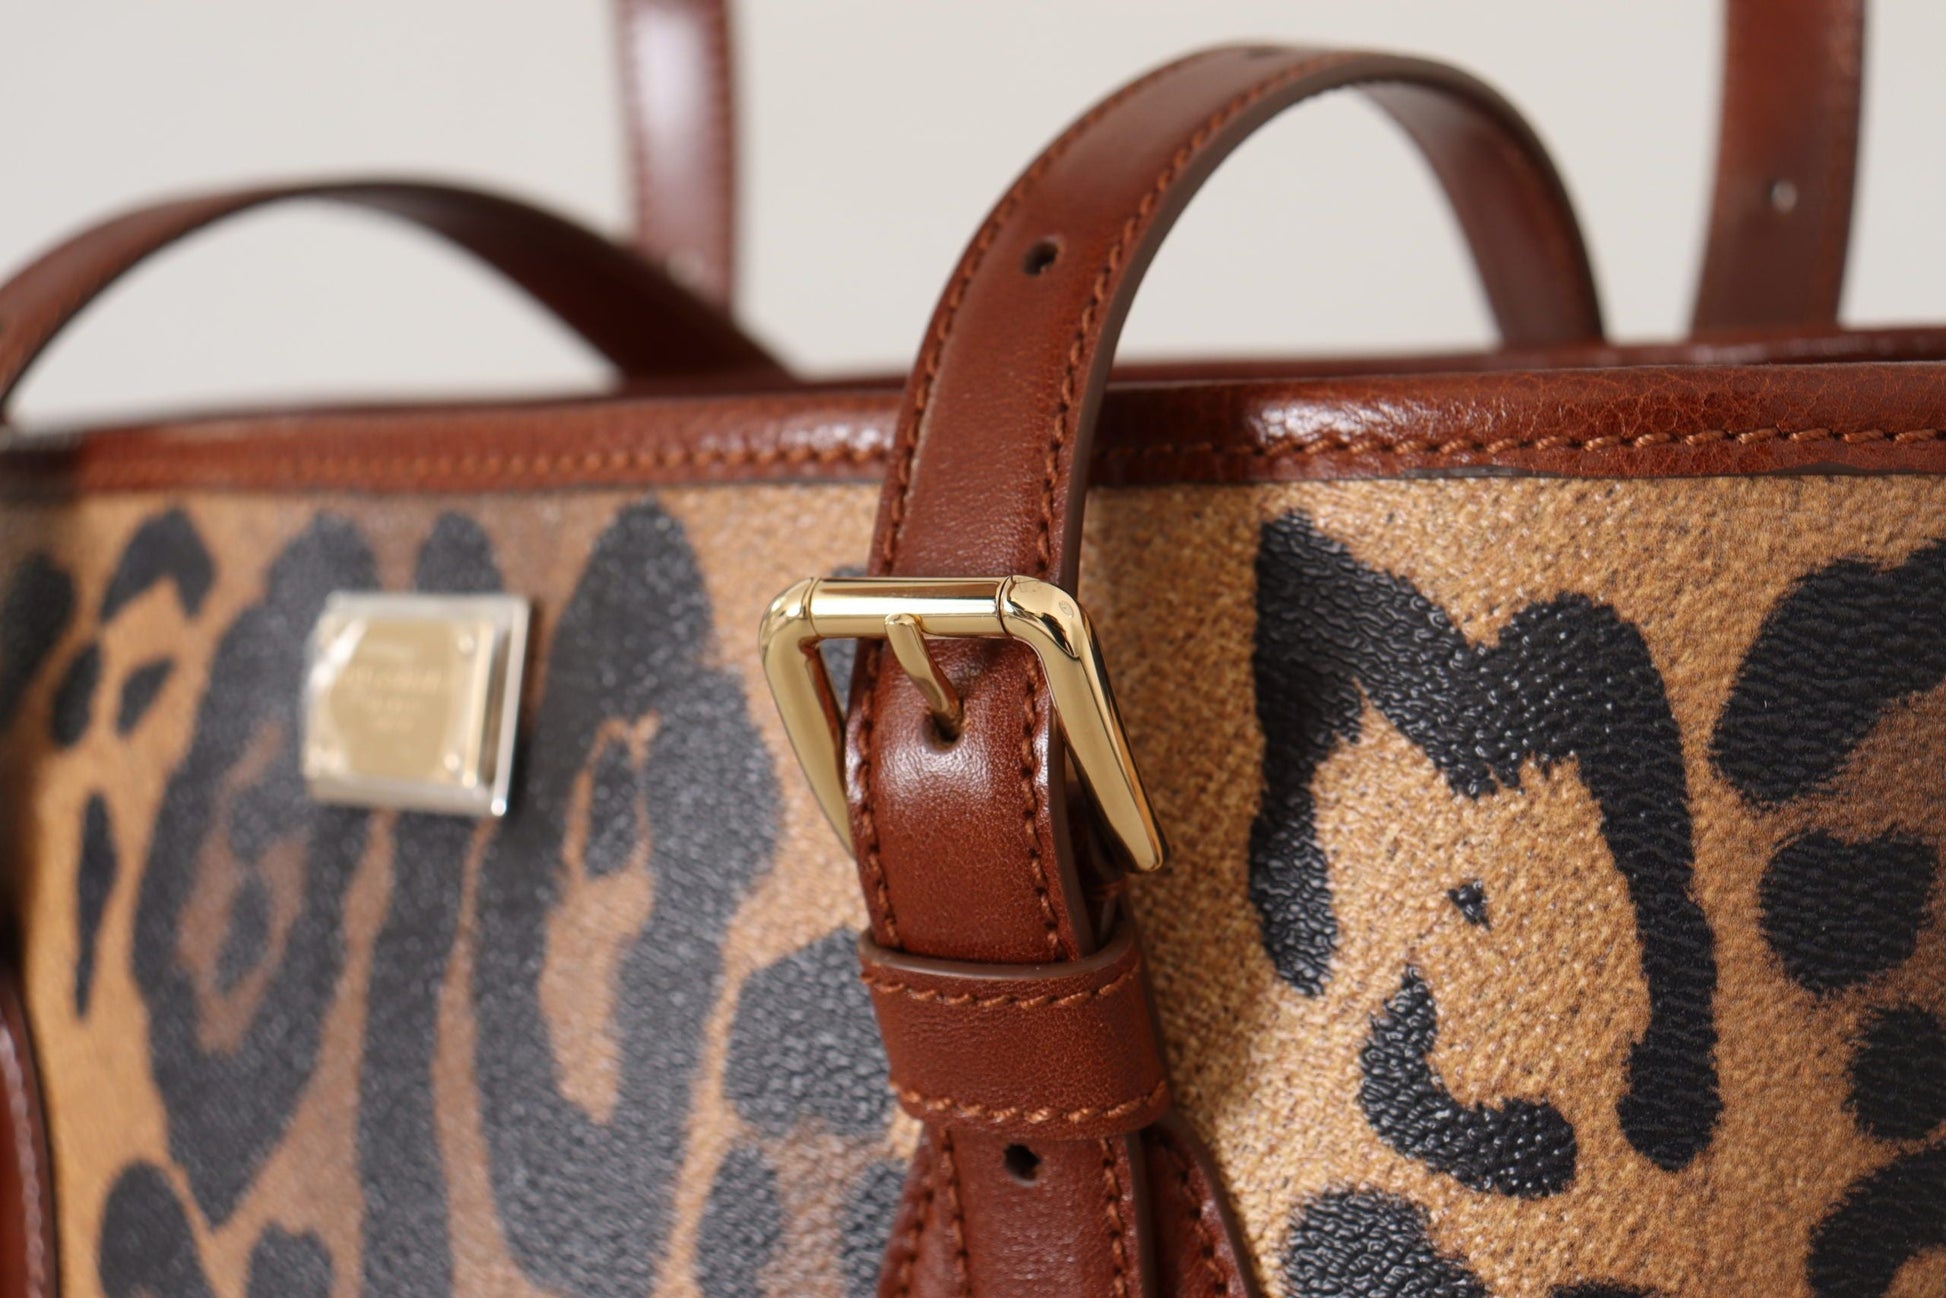 Dolce & Gabbana Brown Leopard Pattern Shopping Tote Hand Bucket Purse - Walbiz.com